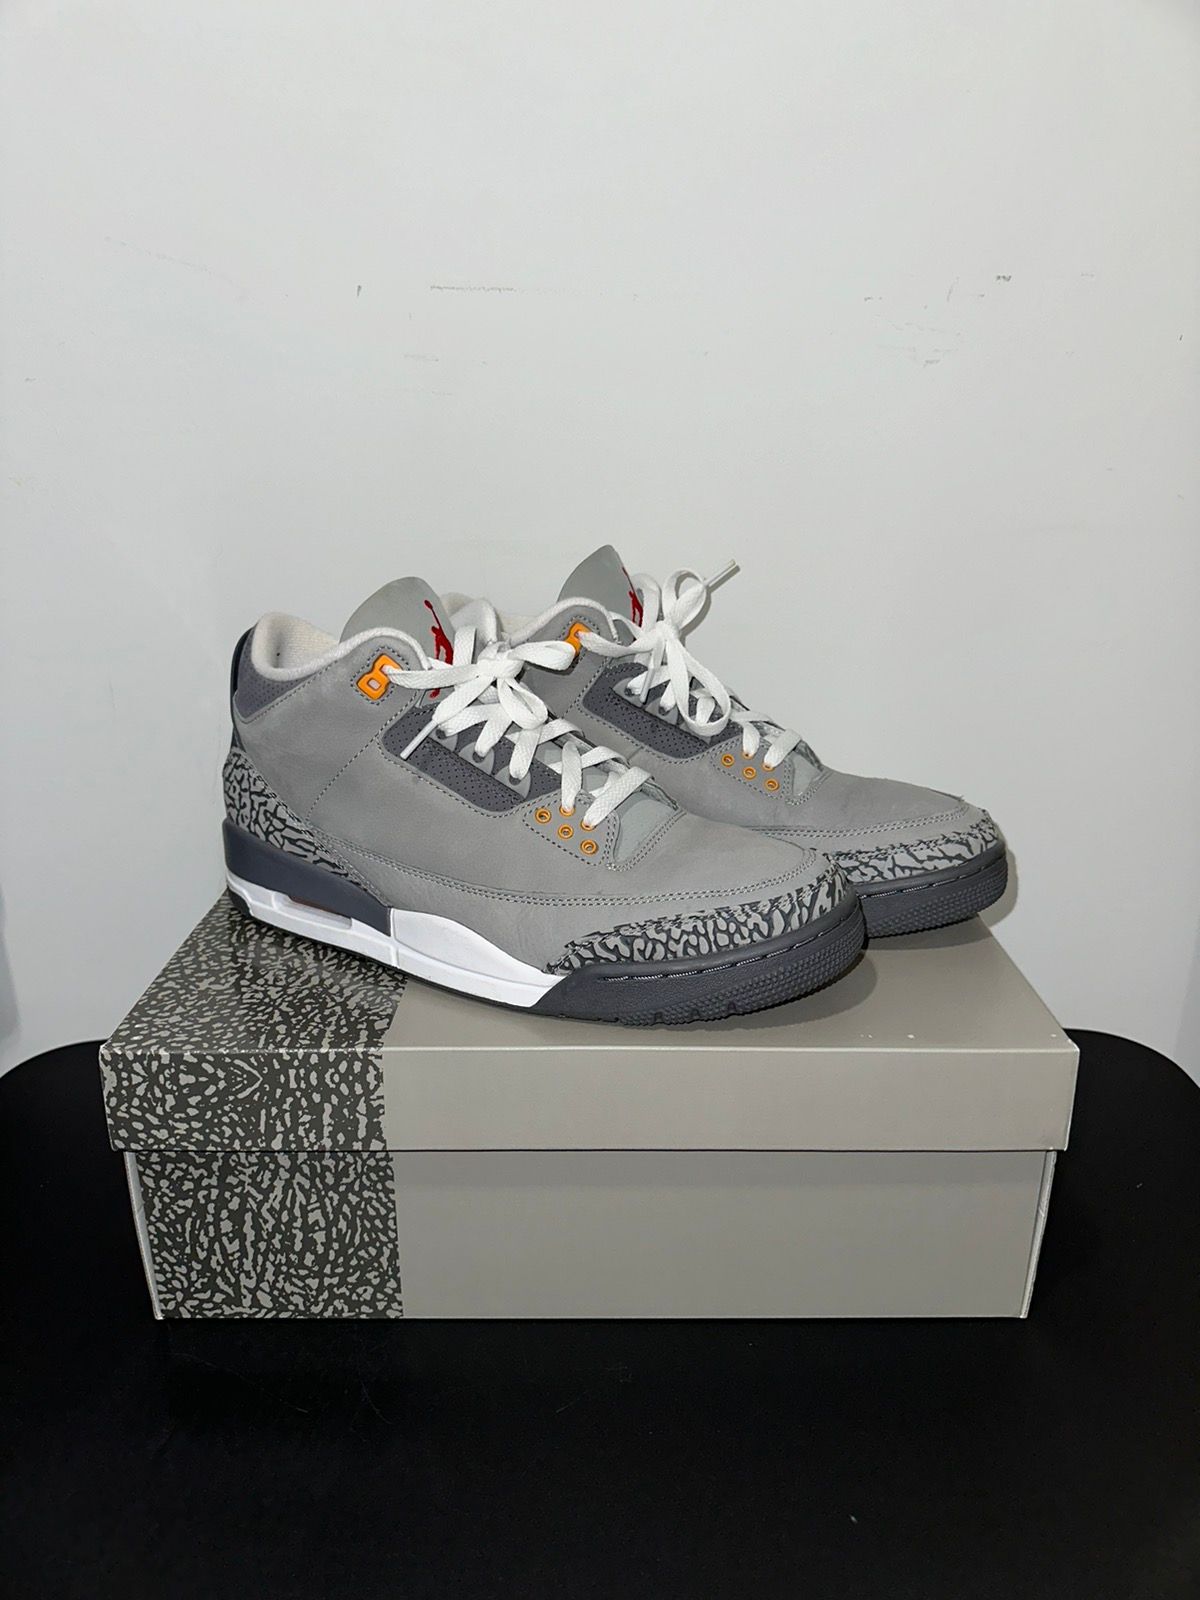 Pre-owned Jordan Brand 3 Cool Grey Shoes